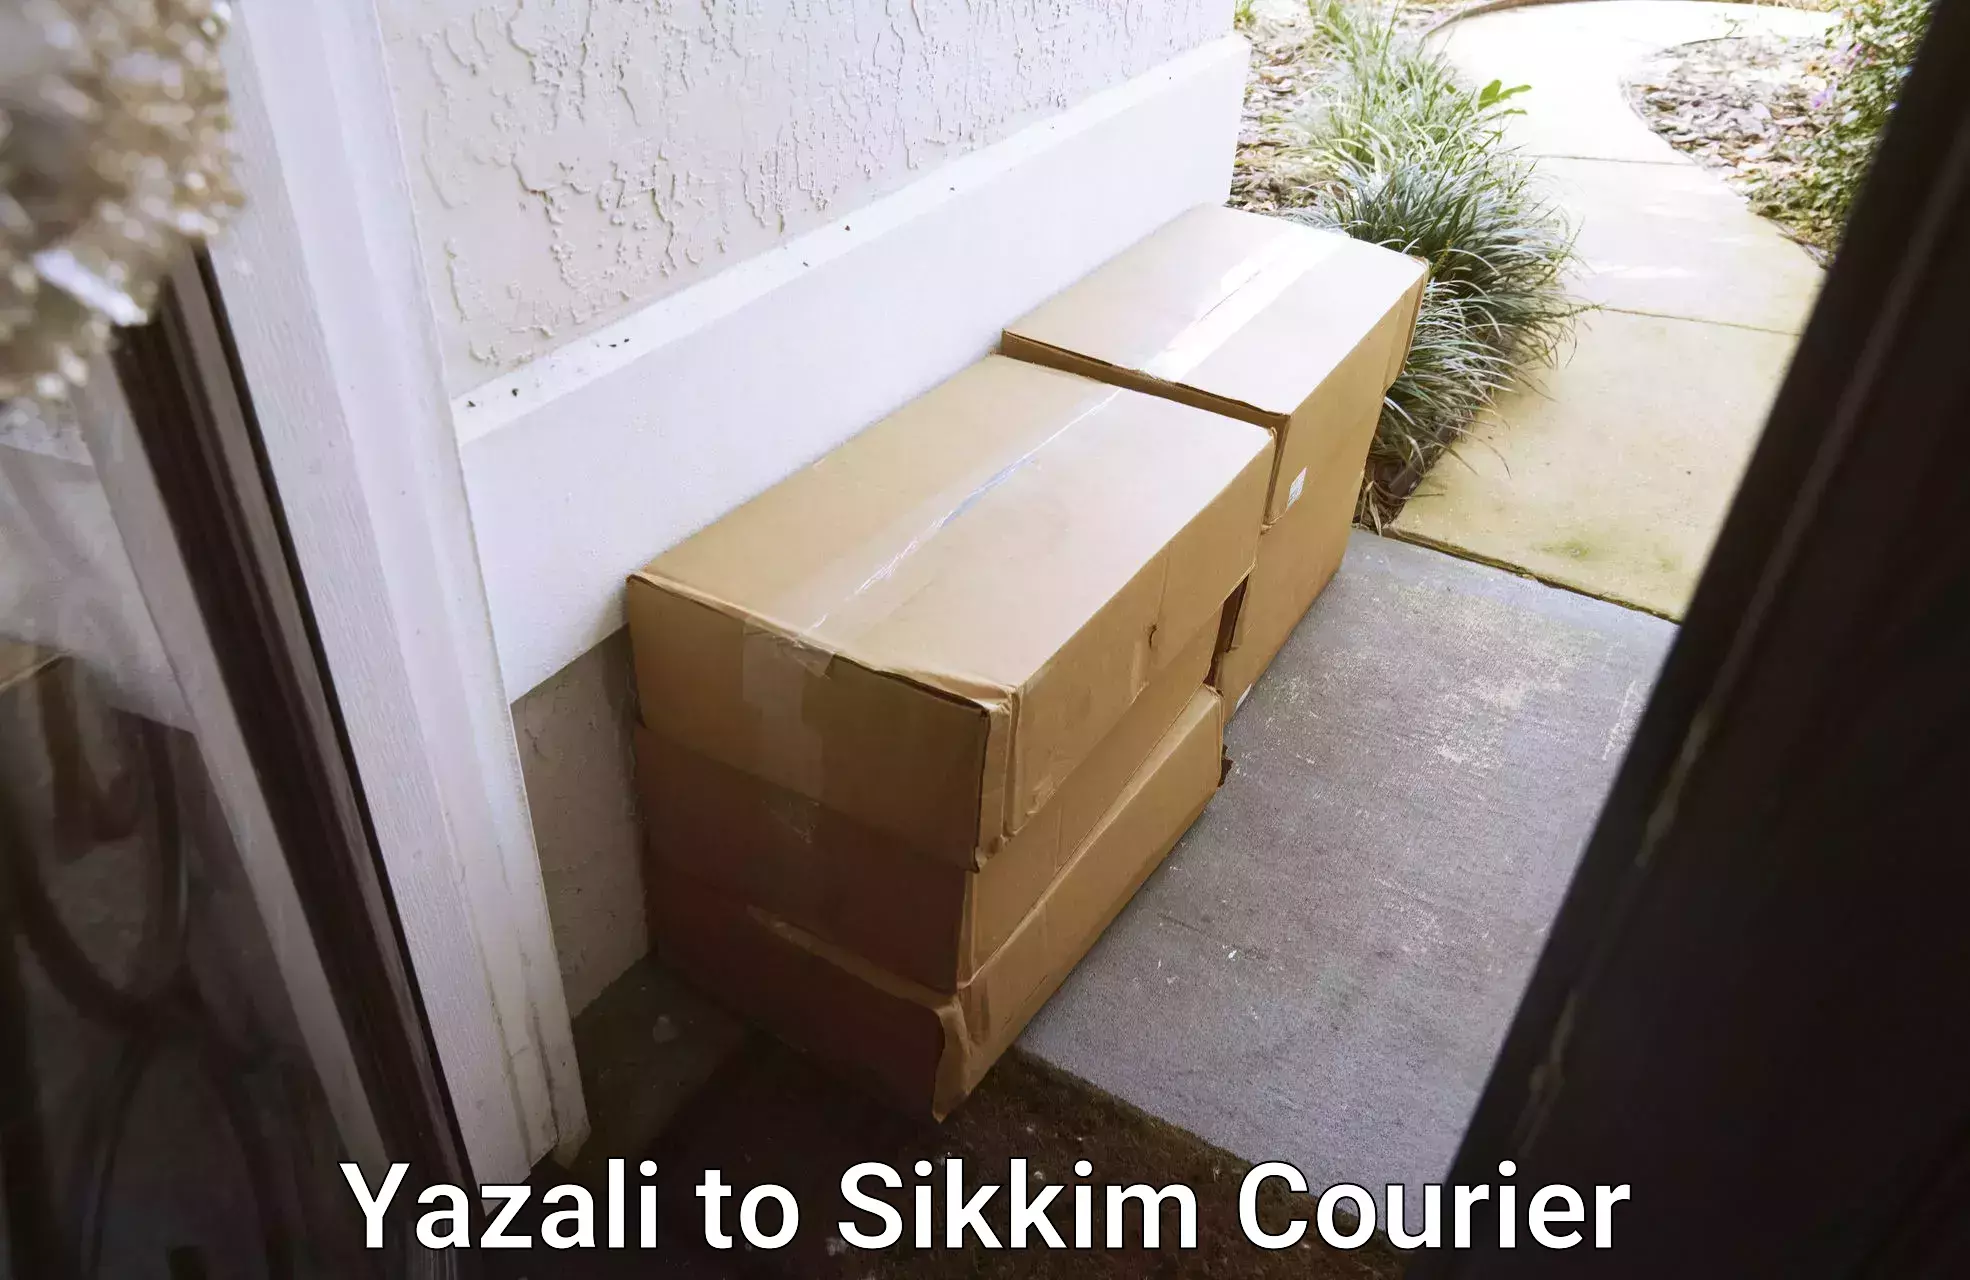 Efficient parcel delivery Yazali to Pelling